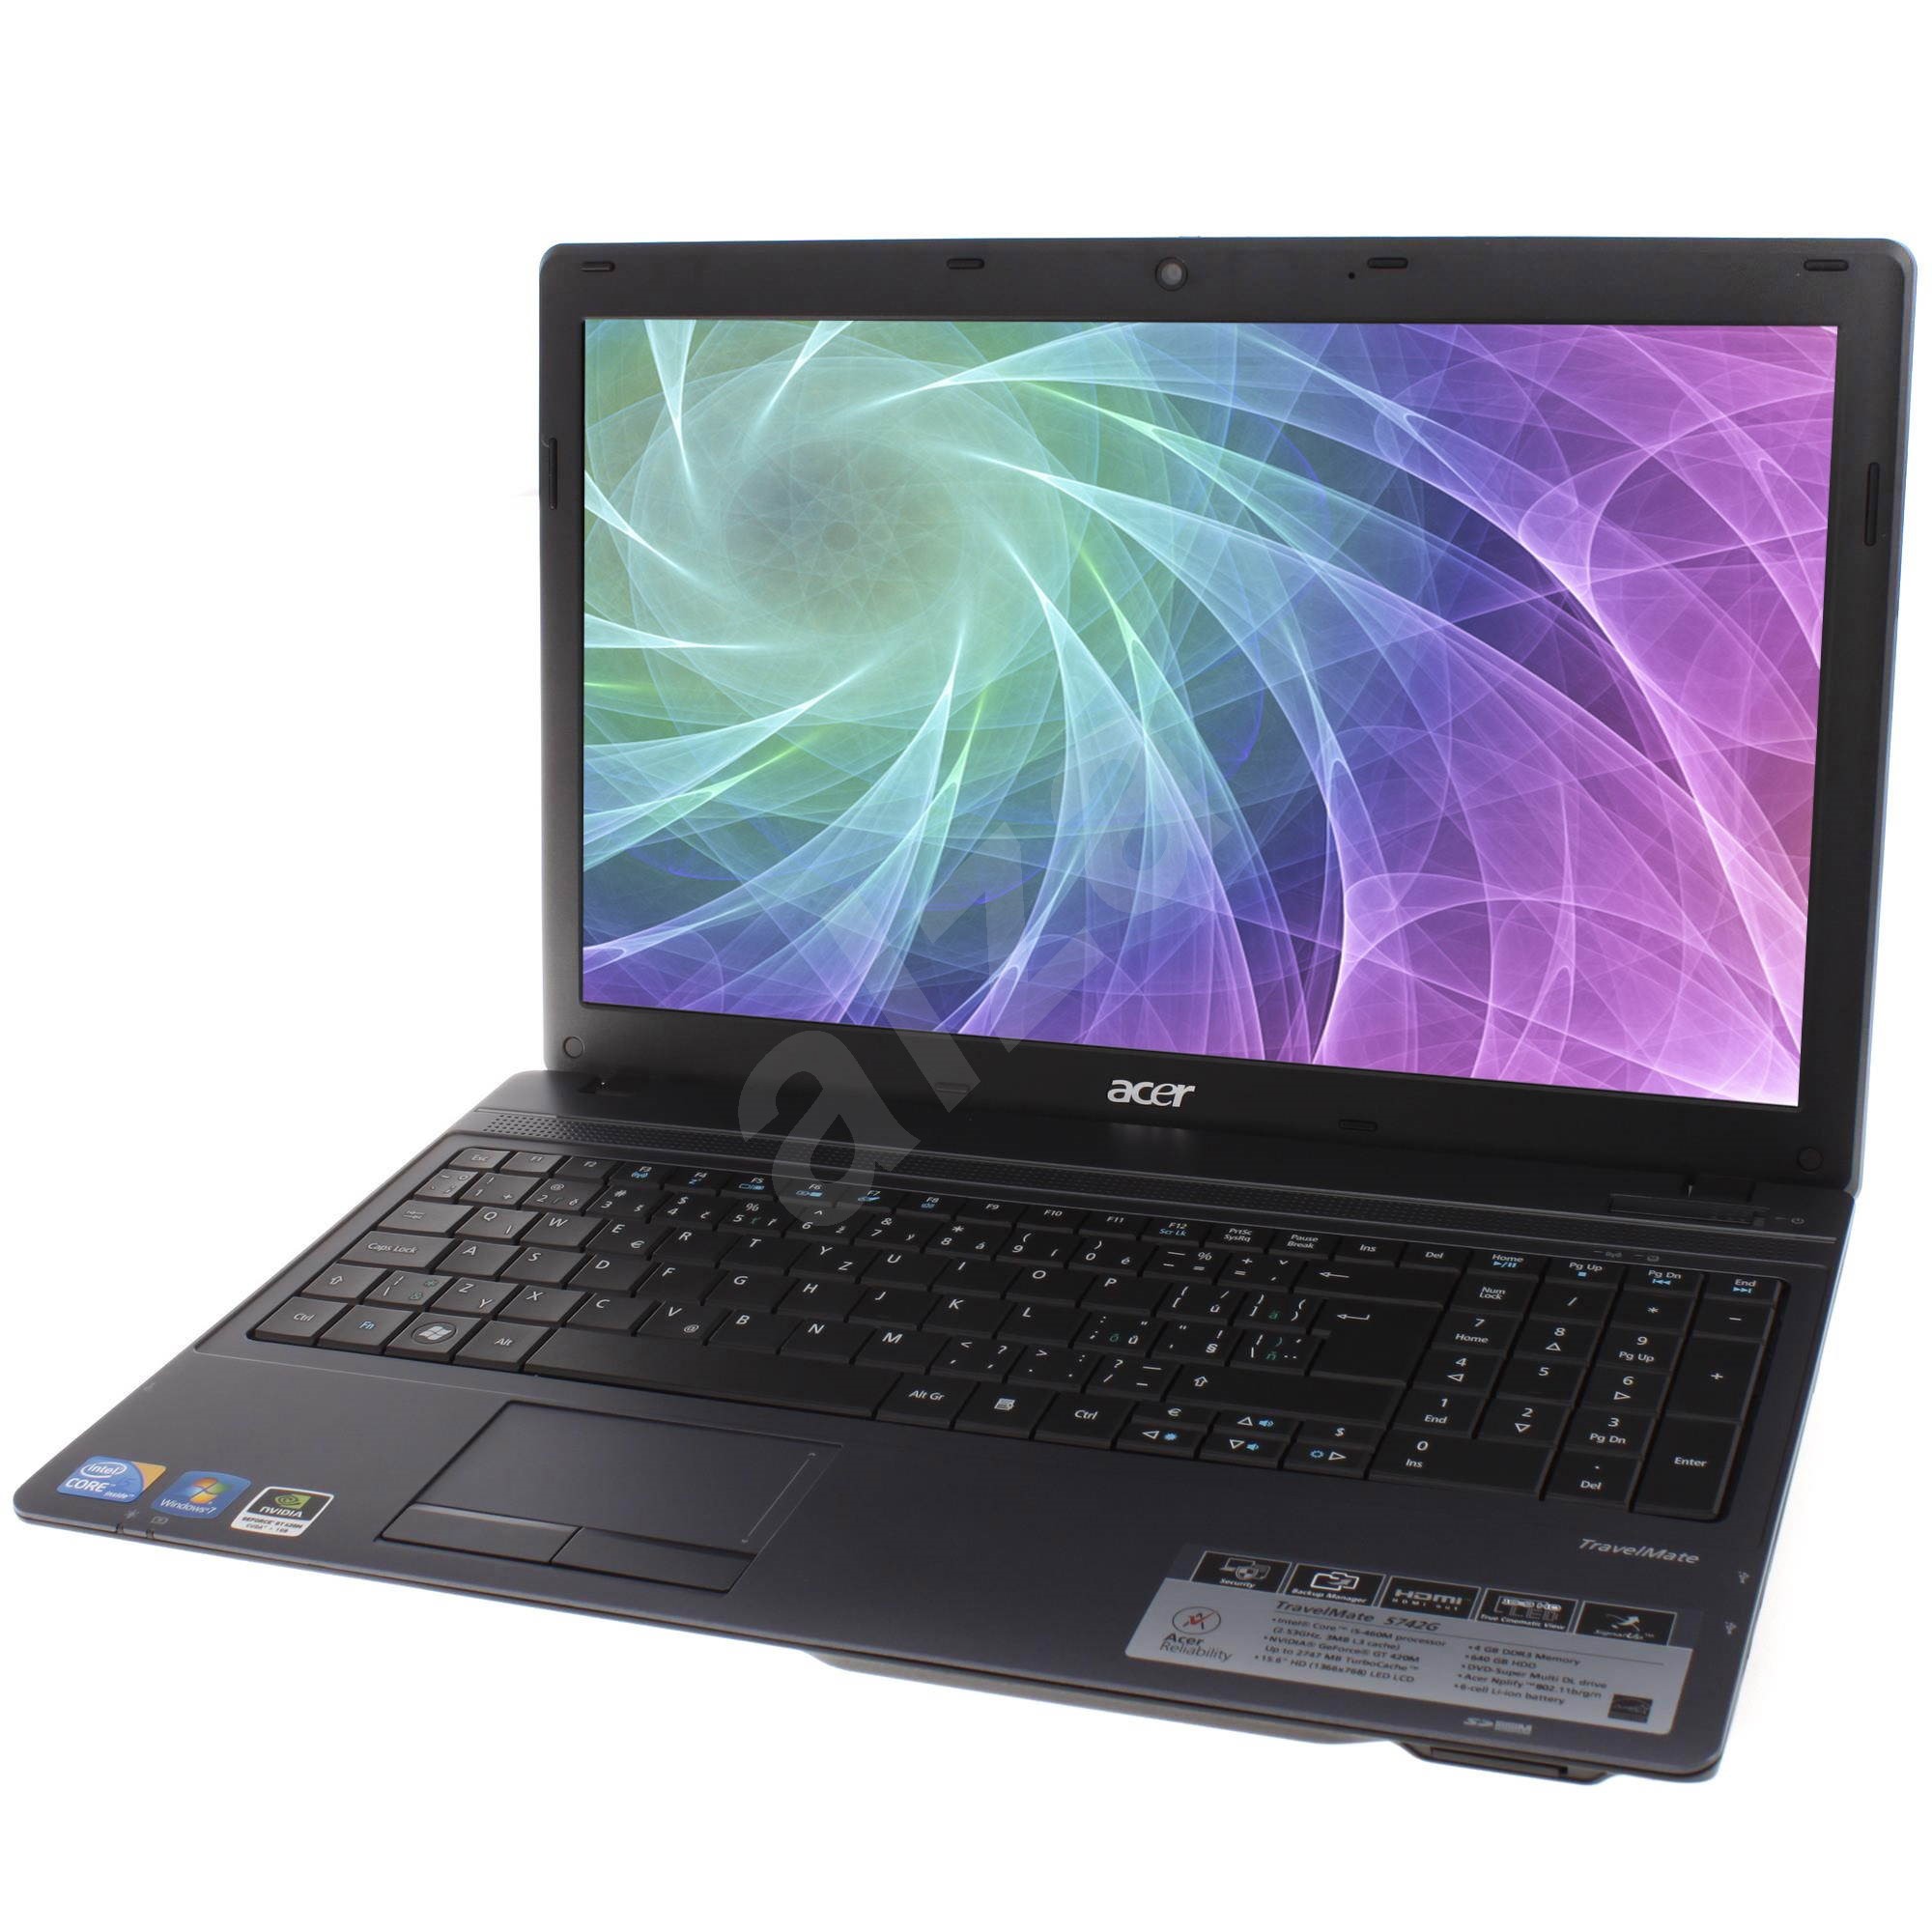 Acer extensa 5635zg. Ноутбук Acer Extensa 7620. Acer 5742g. Портативный компьютер ученика Acer TRAVELMATE tm5744. Extensa 4130.